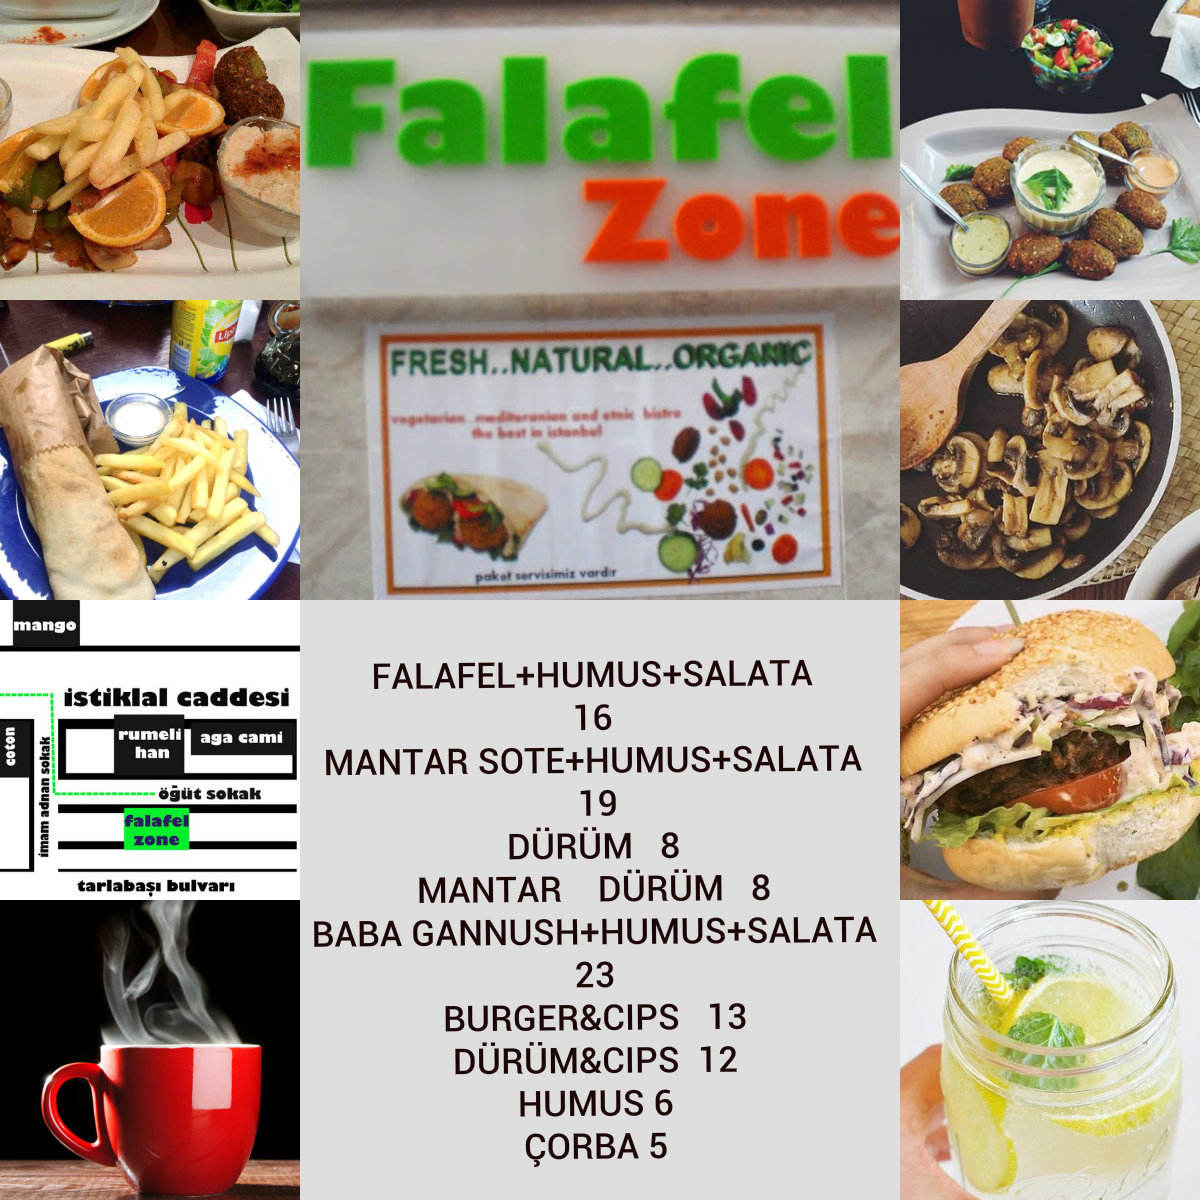 falafelzone...best fresh food in town